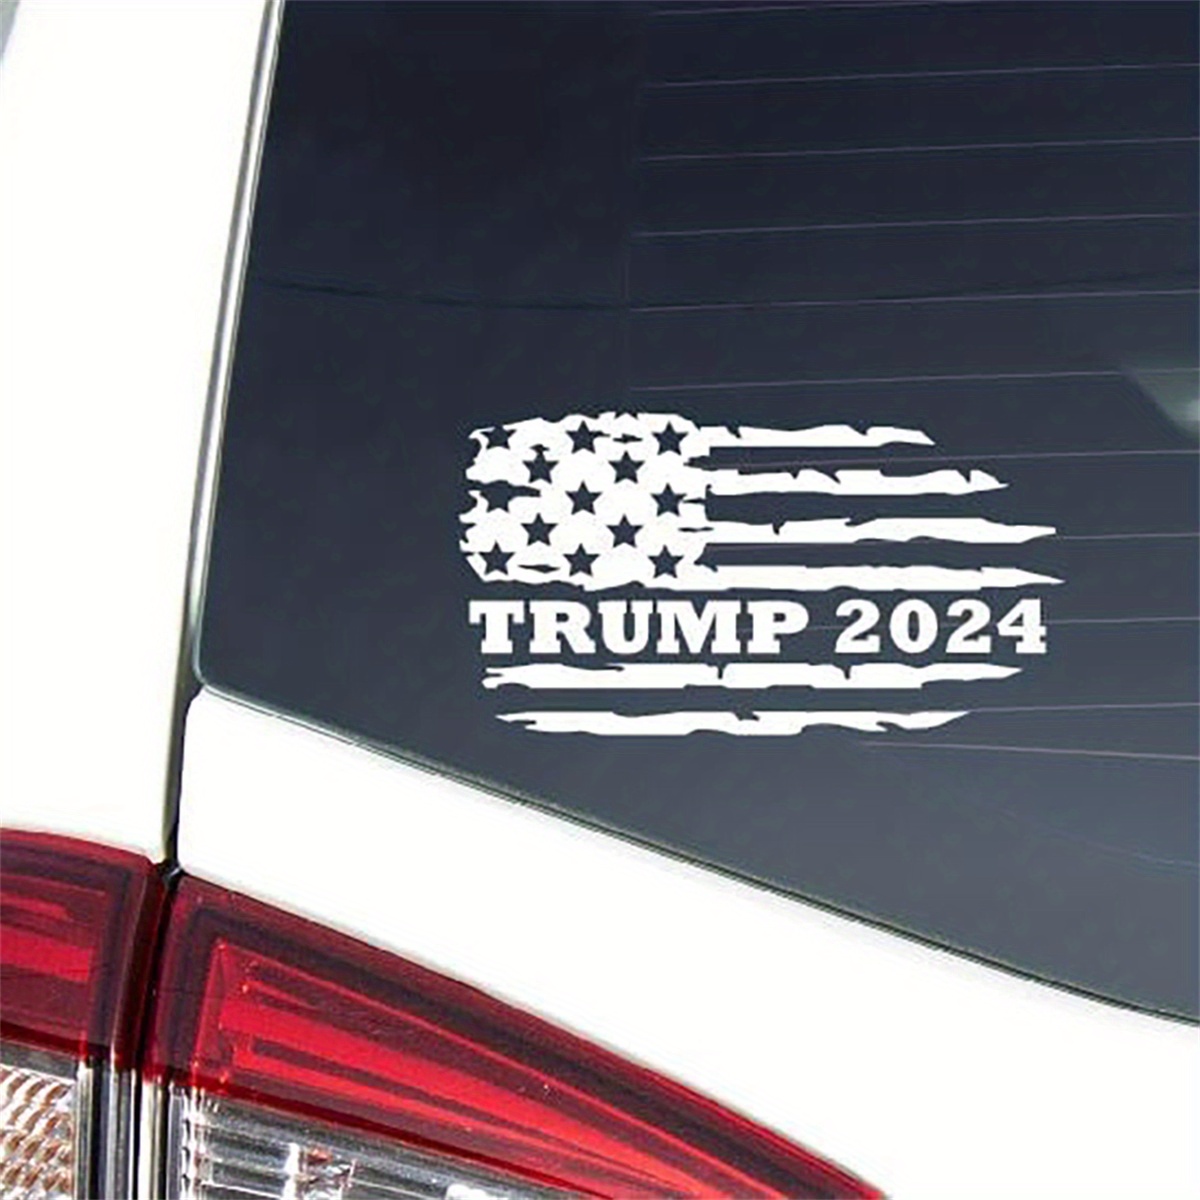  Trump 2024 Sticker 10 Pcs,Trump Bumper Stickers for  Presidential Election - Five Different Sticker Designs (10 pcs) (10 pcs)